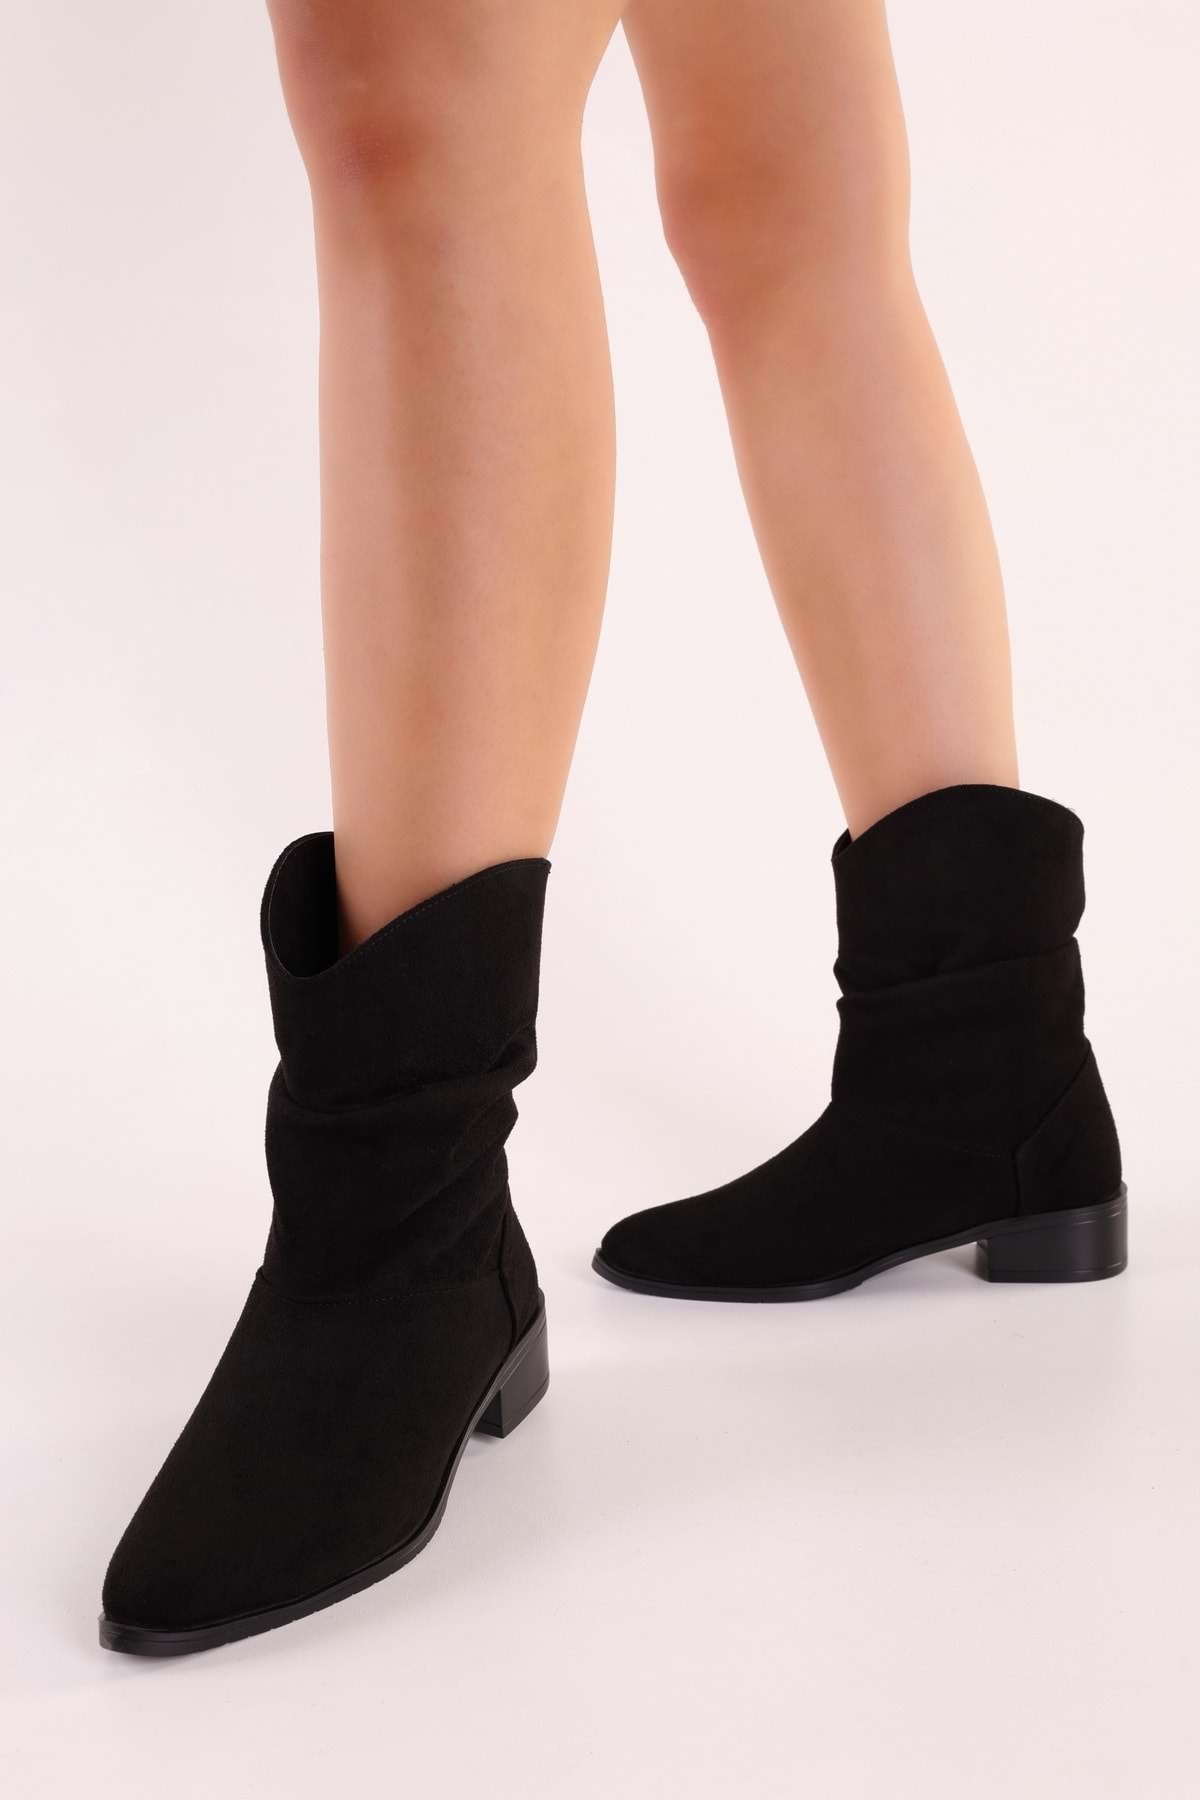 Levně Shoeberry Women's Archie Black Suede Gathered Flat Heeled Boots, Black Suede.